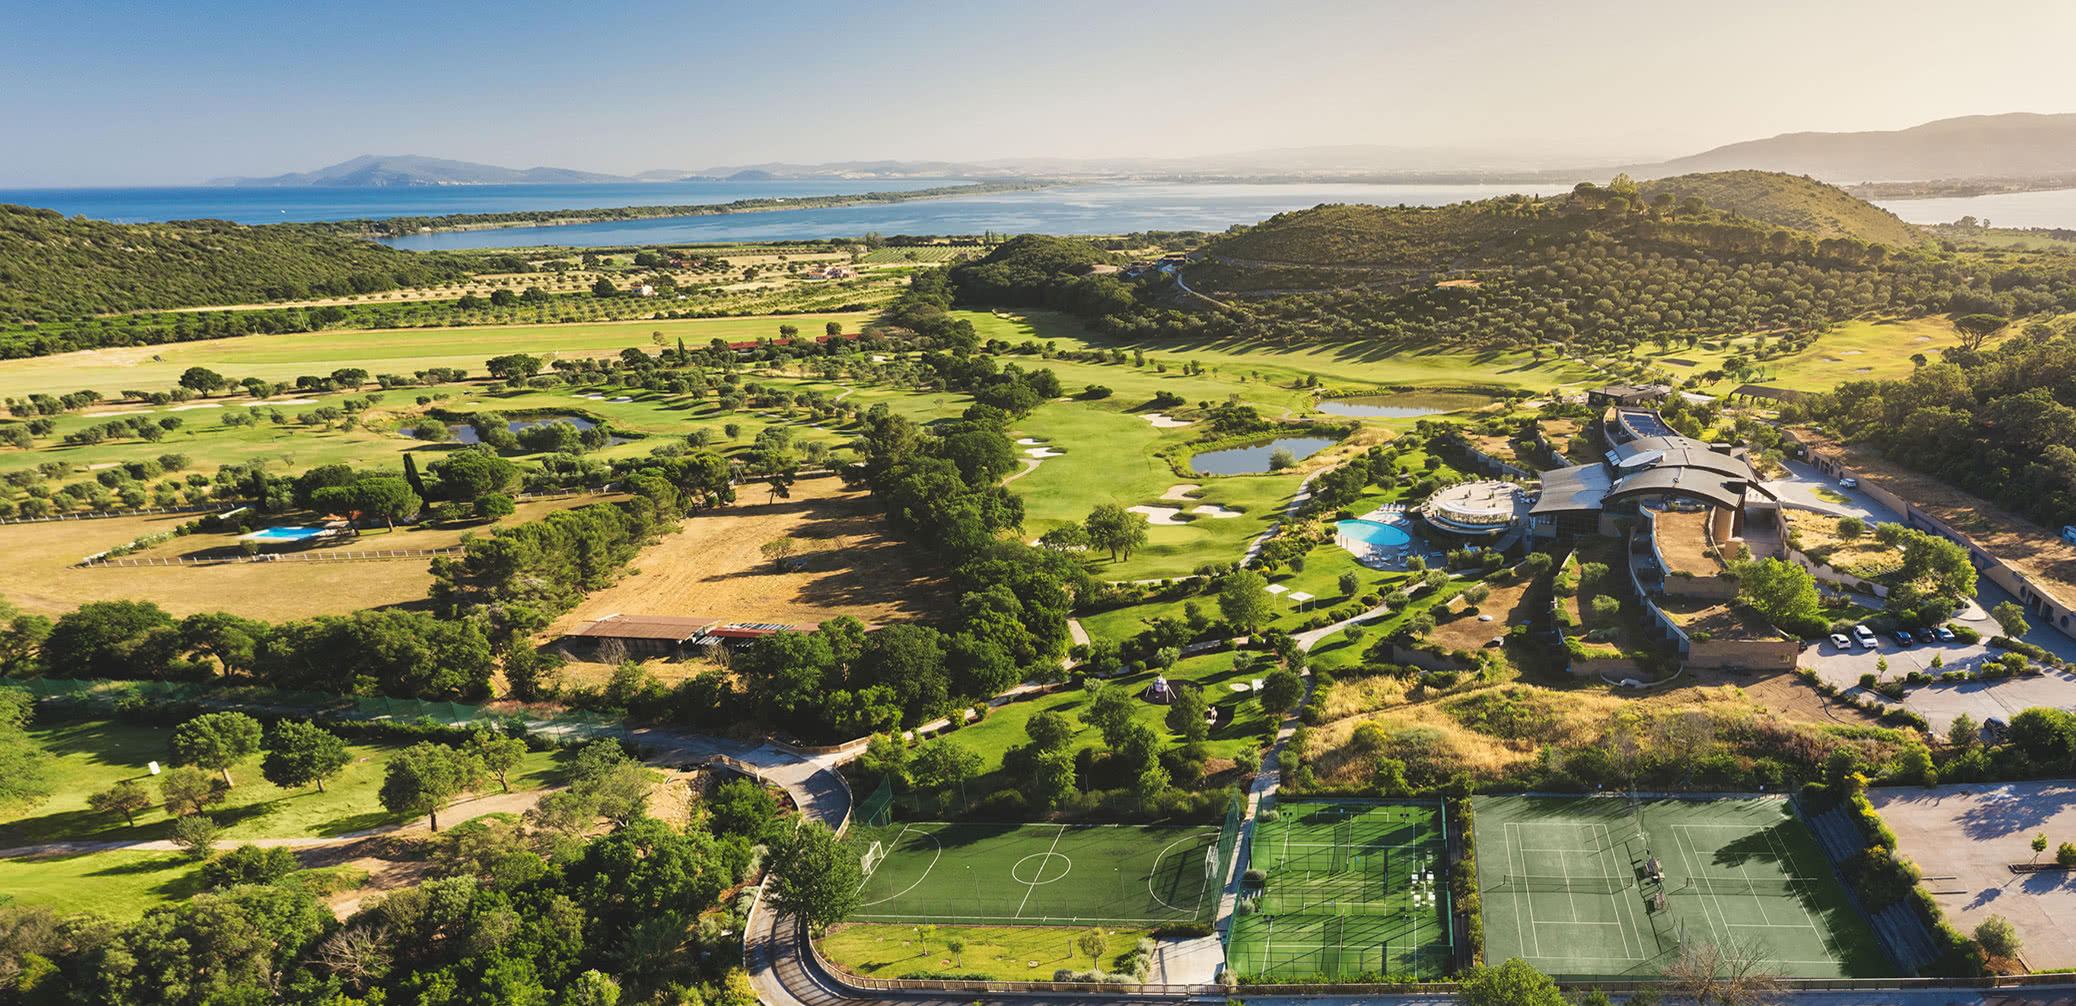 Review: Argentario Golf & Wellness Resort, Tuscany